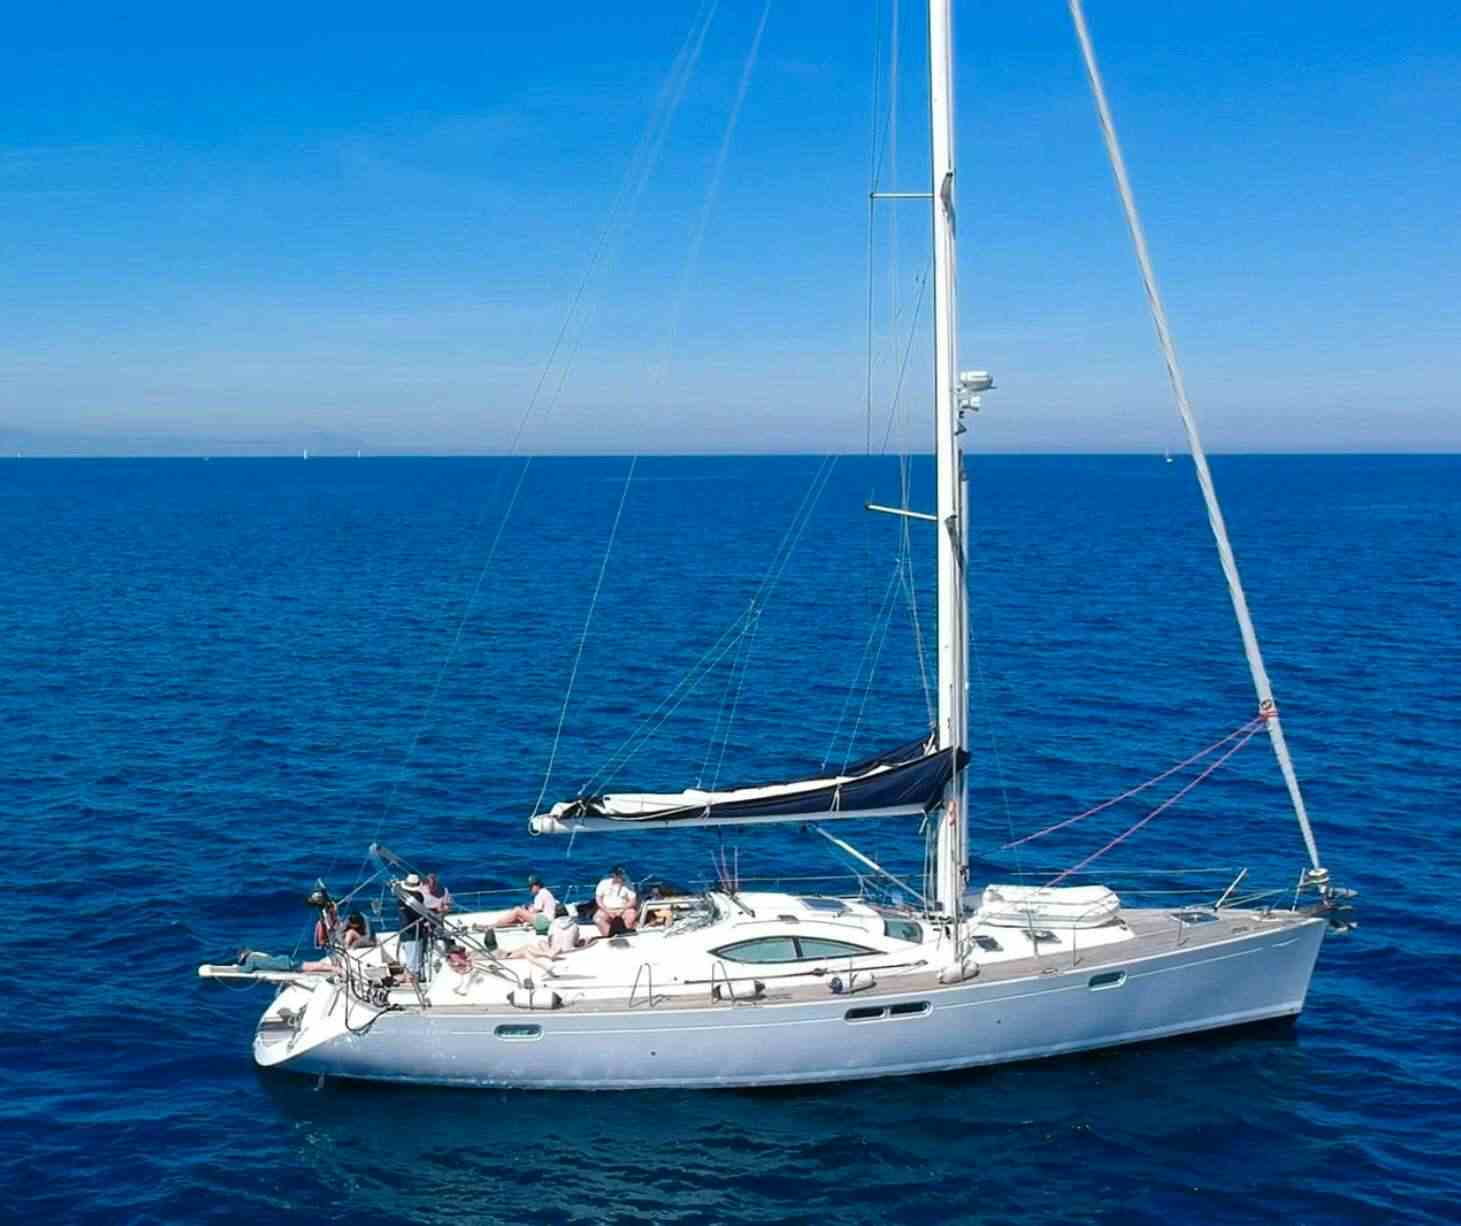 osarracino - Sailboat Charter Balearics & Boat hire in Balearics & Spain 1